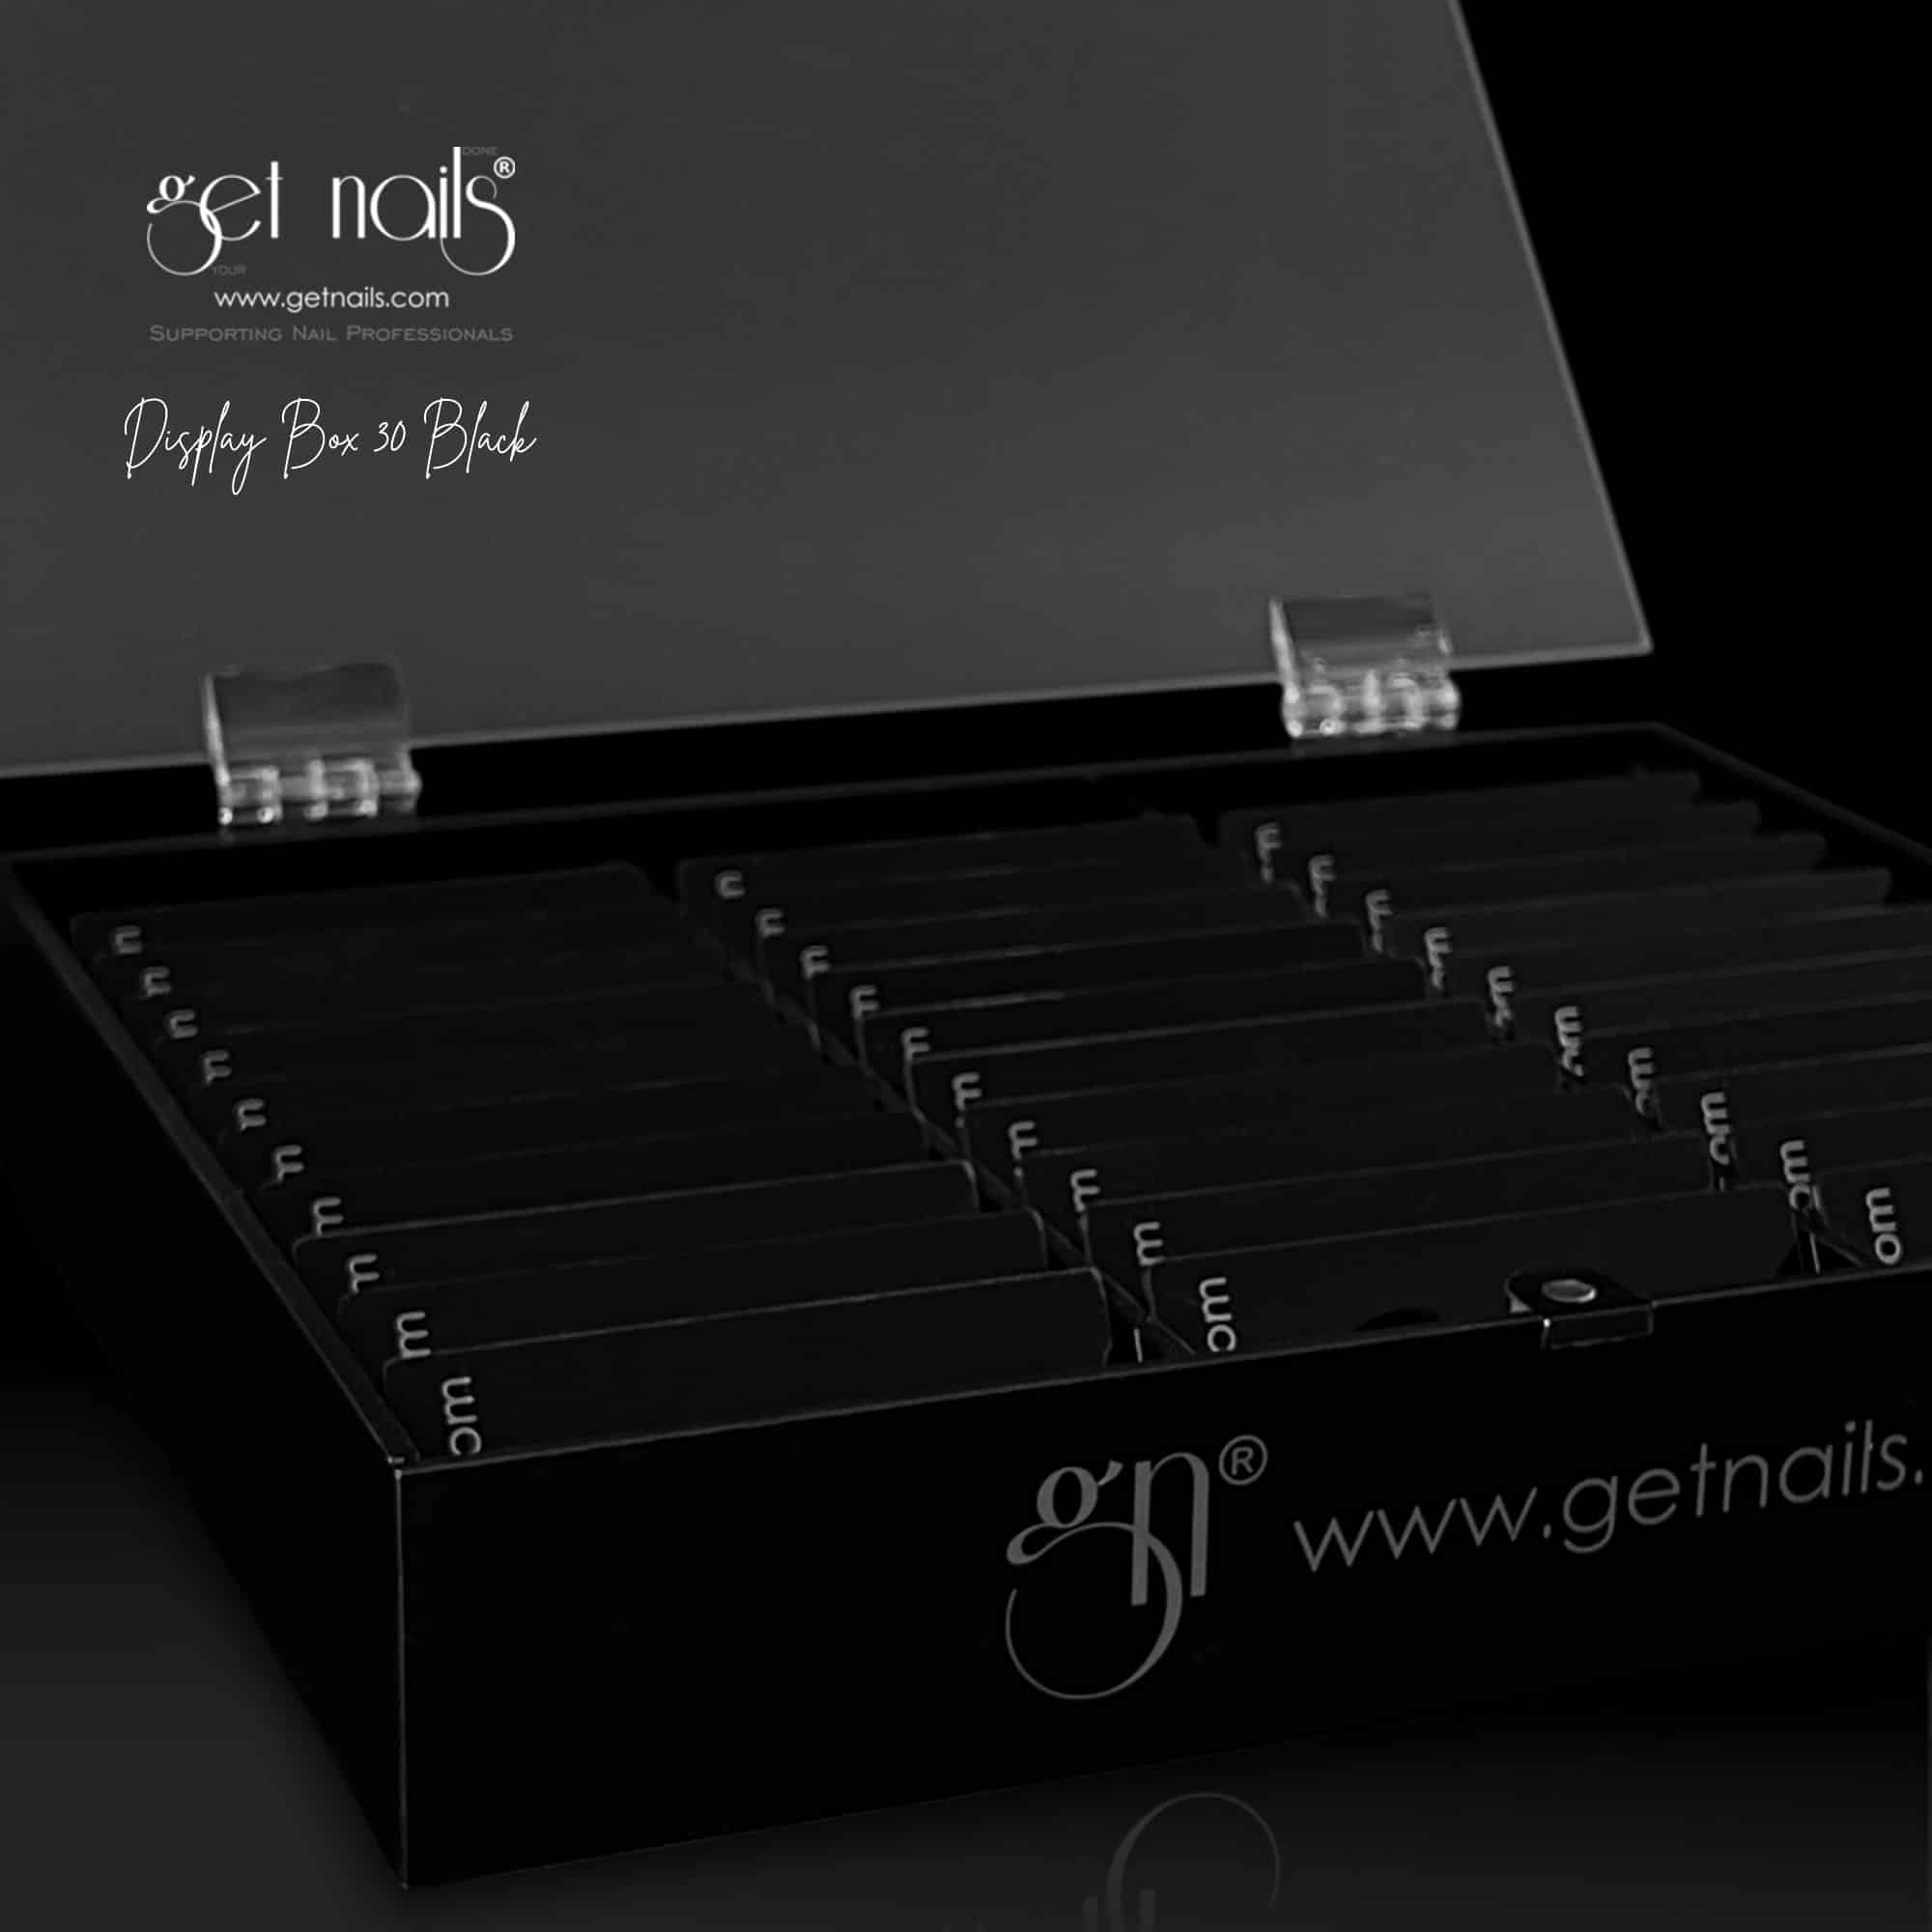 Get Nails Austria - Display Box 30 Schwarz